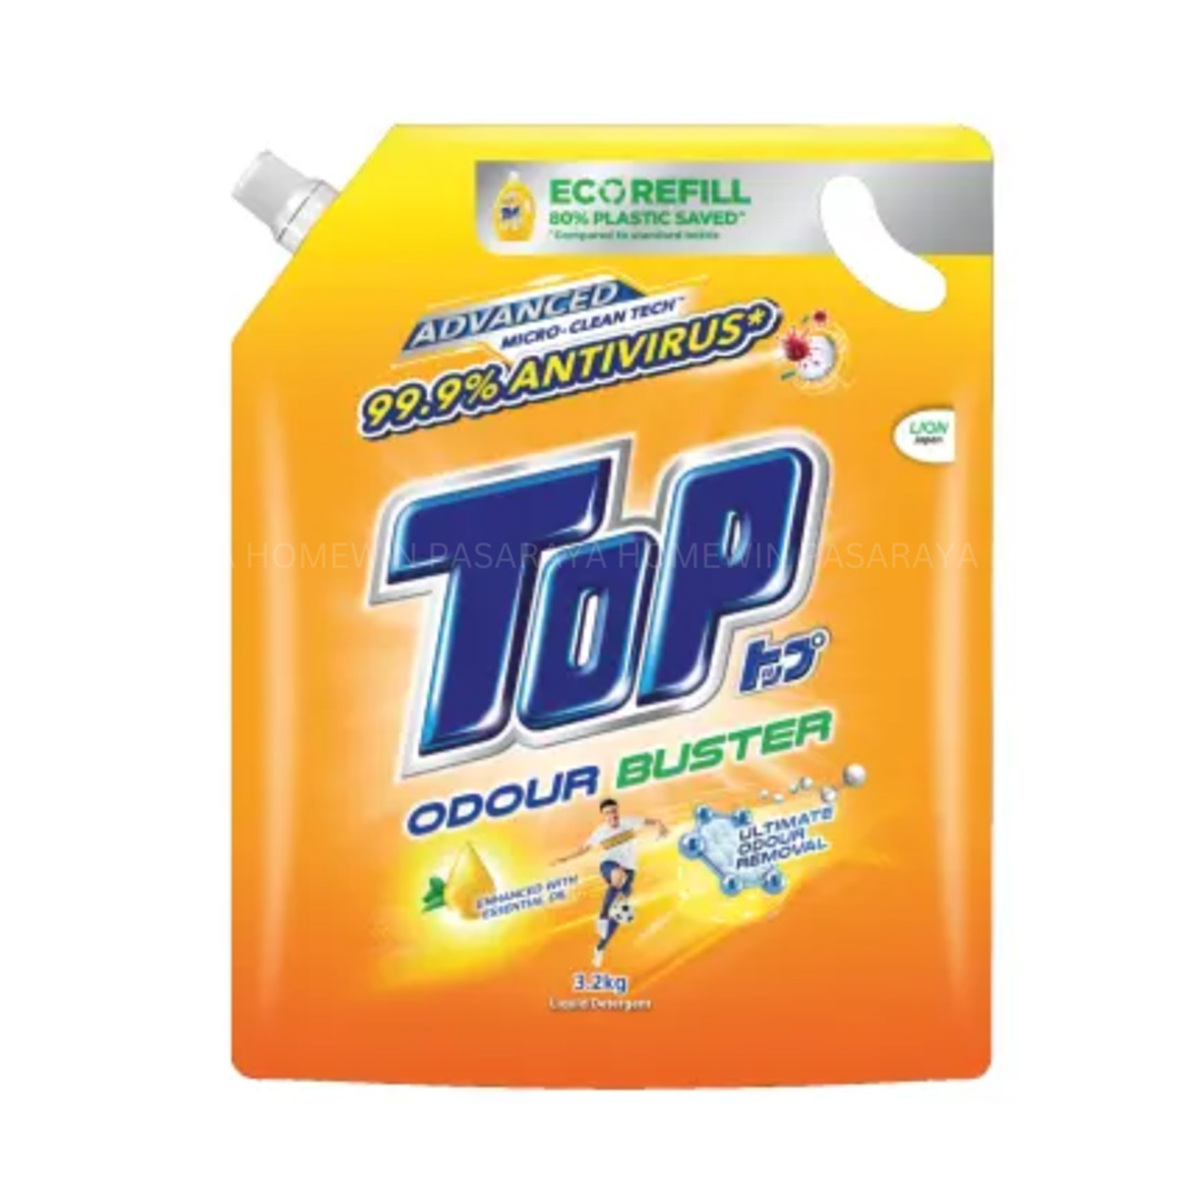 Top Liquid Detergent Odour Buster 3.2kg